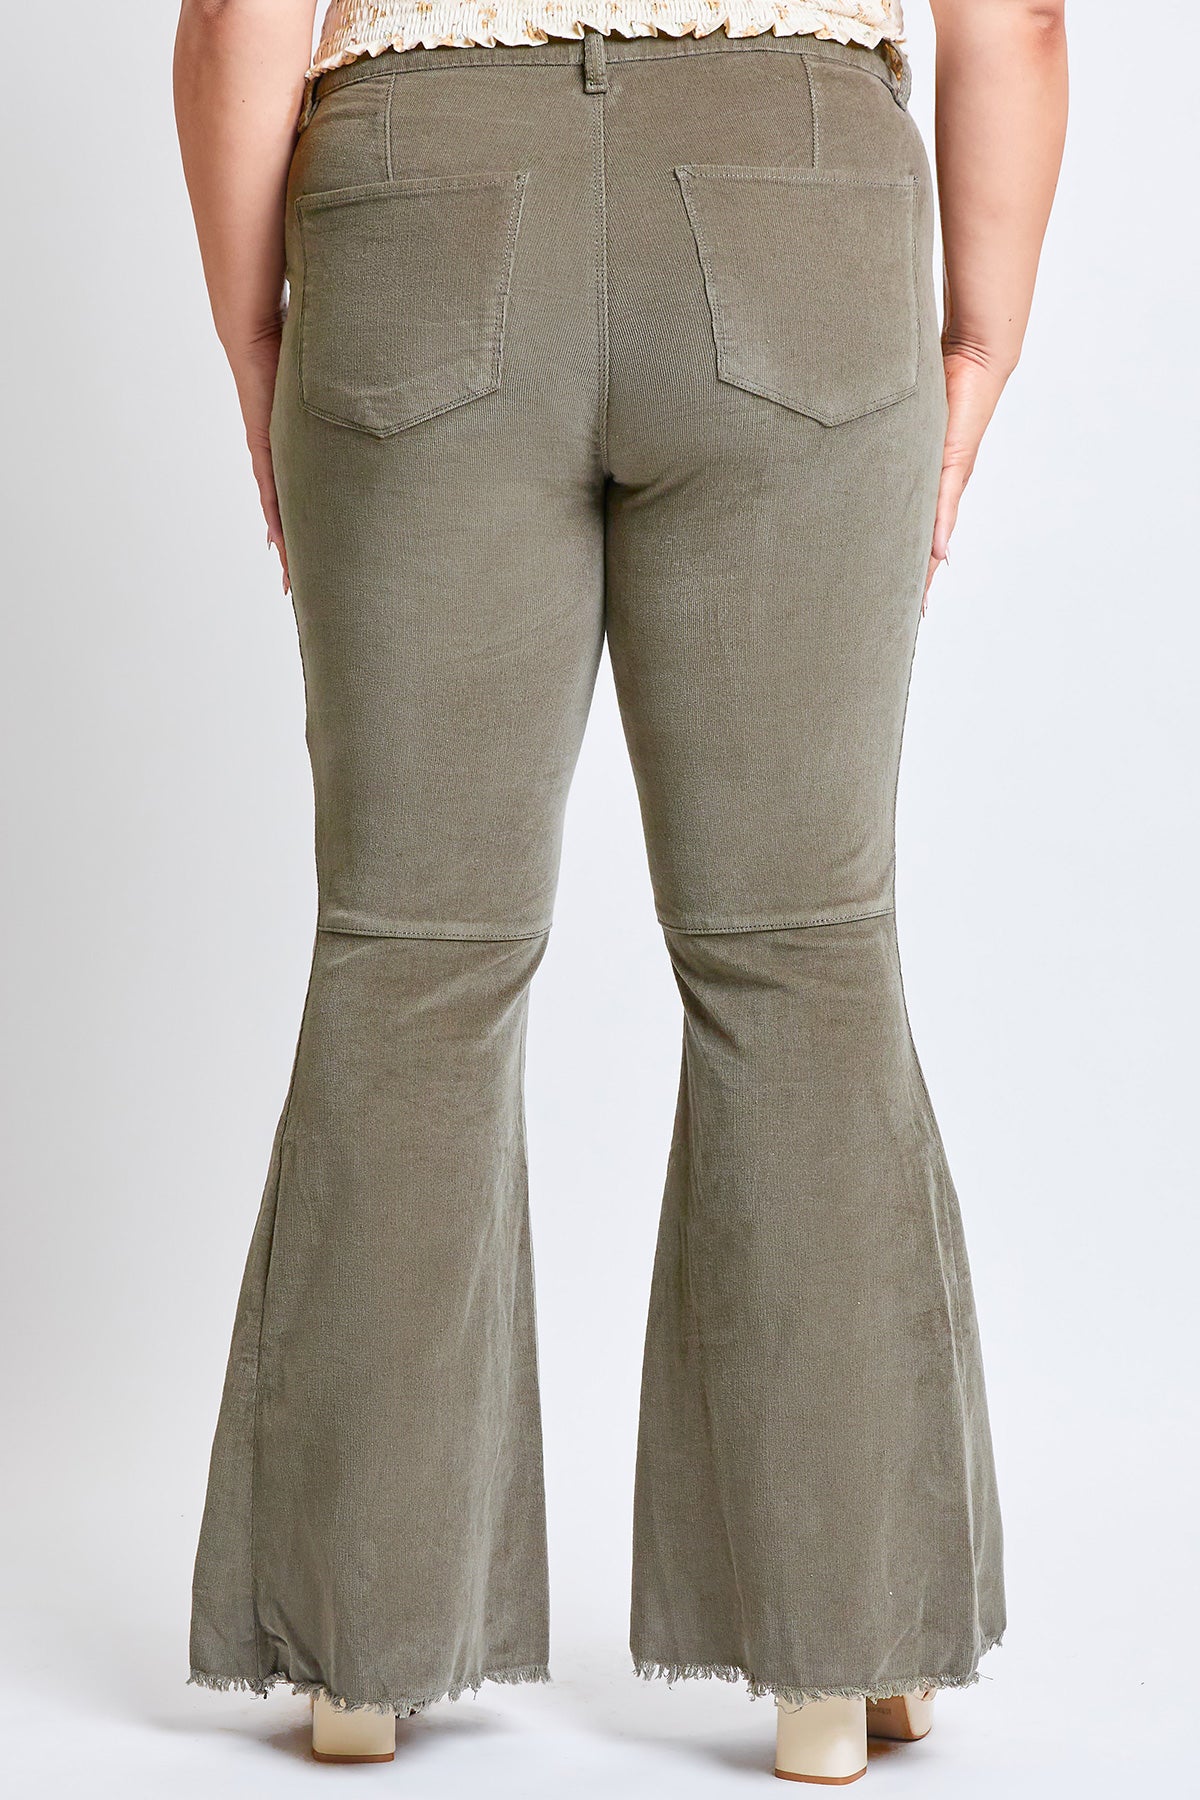 Plus Size Women's Corduroy Flare Pants